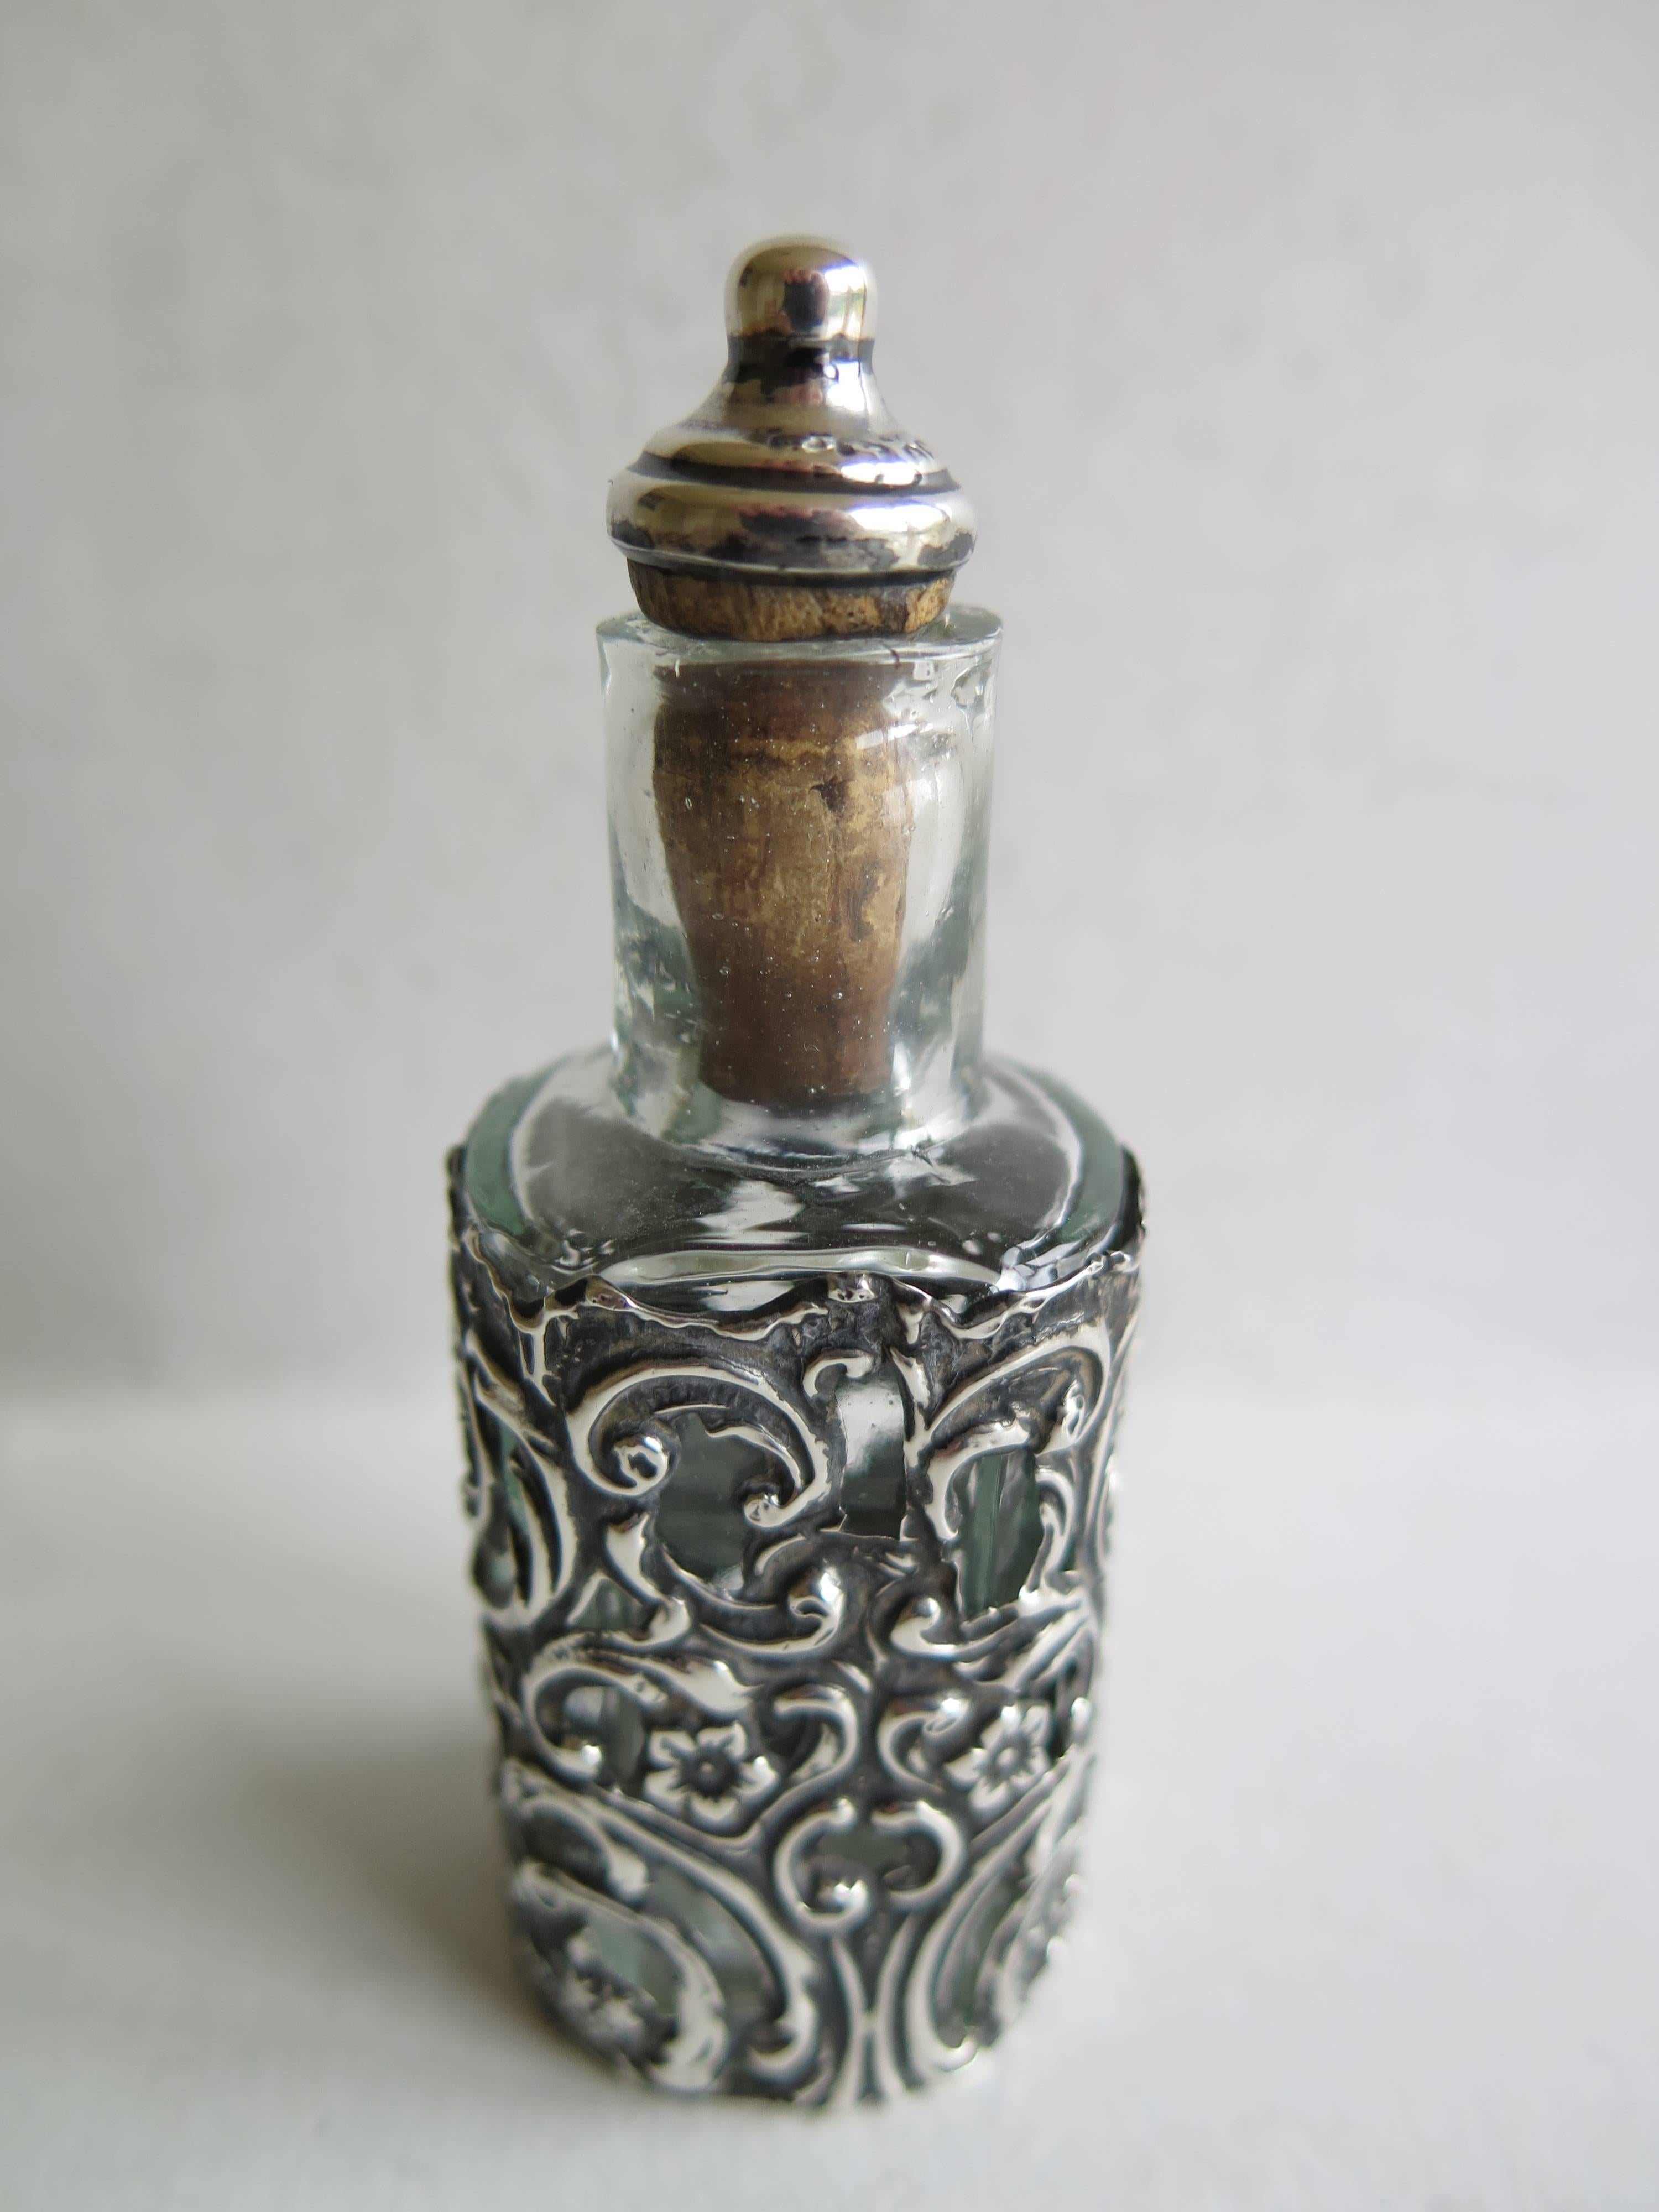 Edwardian Sterling Silver Cased Glass Perfume or Scent Bottle, Birmingham England, 1904